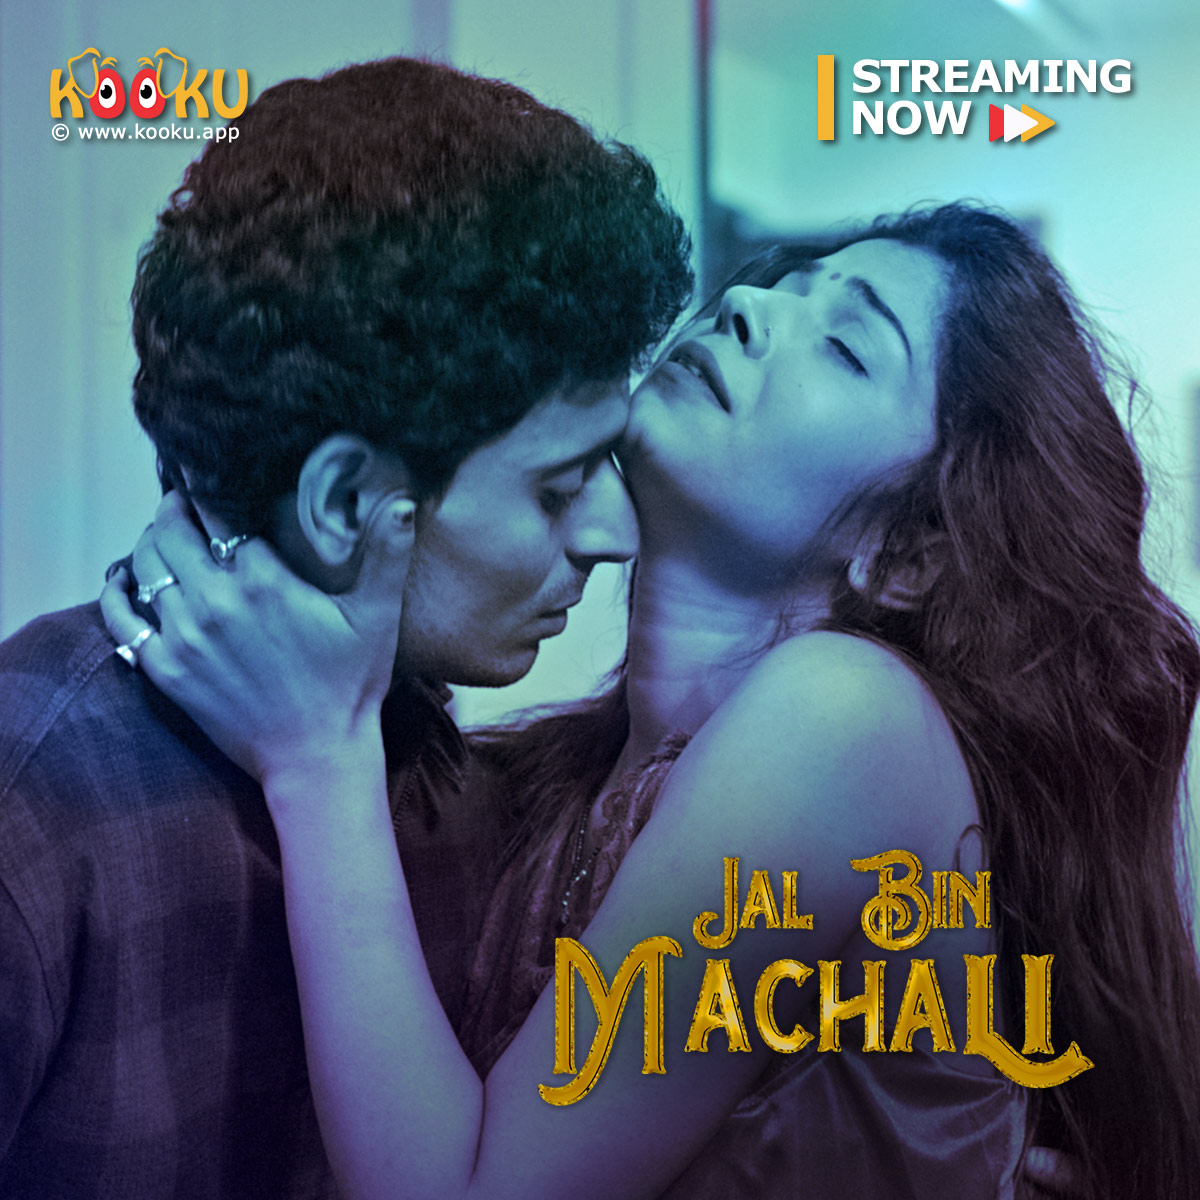 Jal Bin Machali 2020 Hindi S01E04 Kokku Original Web Series 1080p HDRip 300MB Download